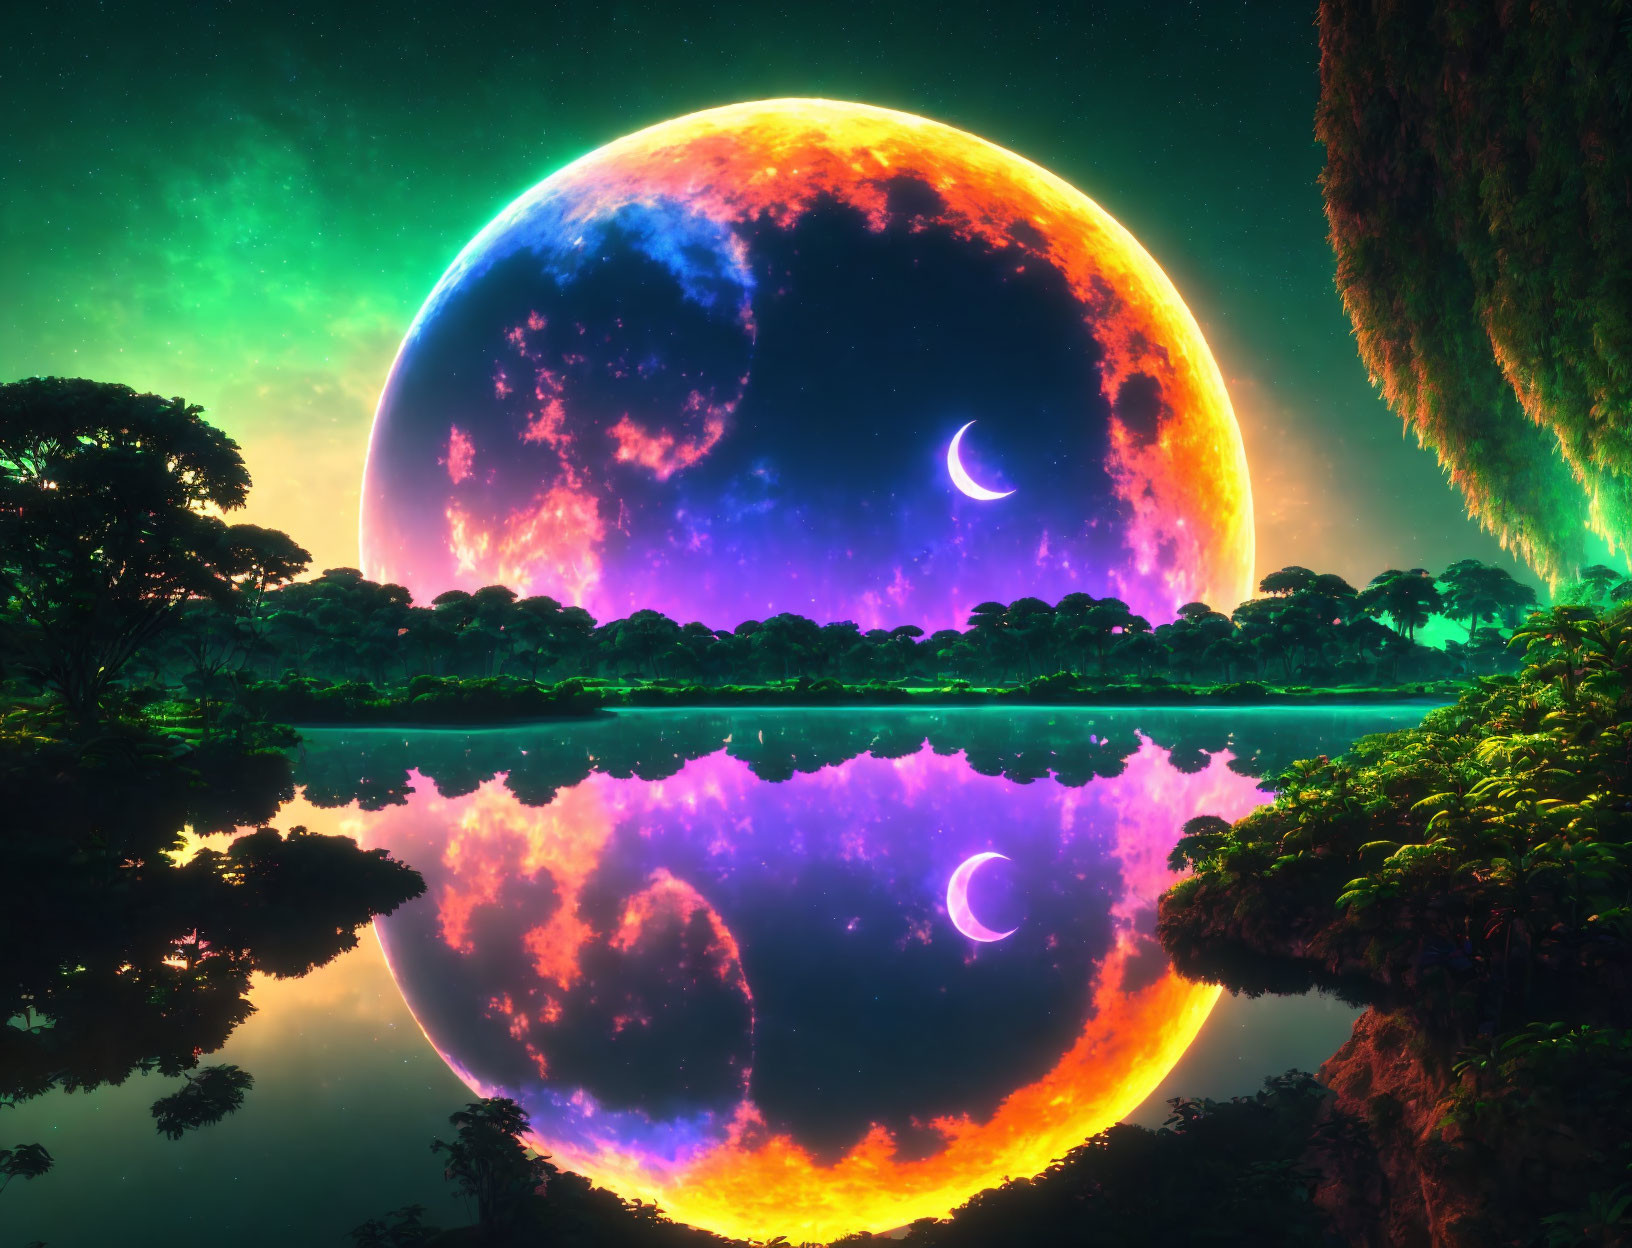 Colorful digital artwork: Giant multicolored planet over serene lake